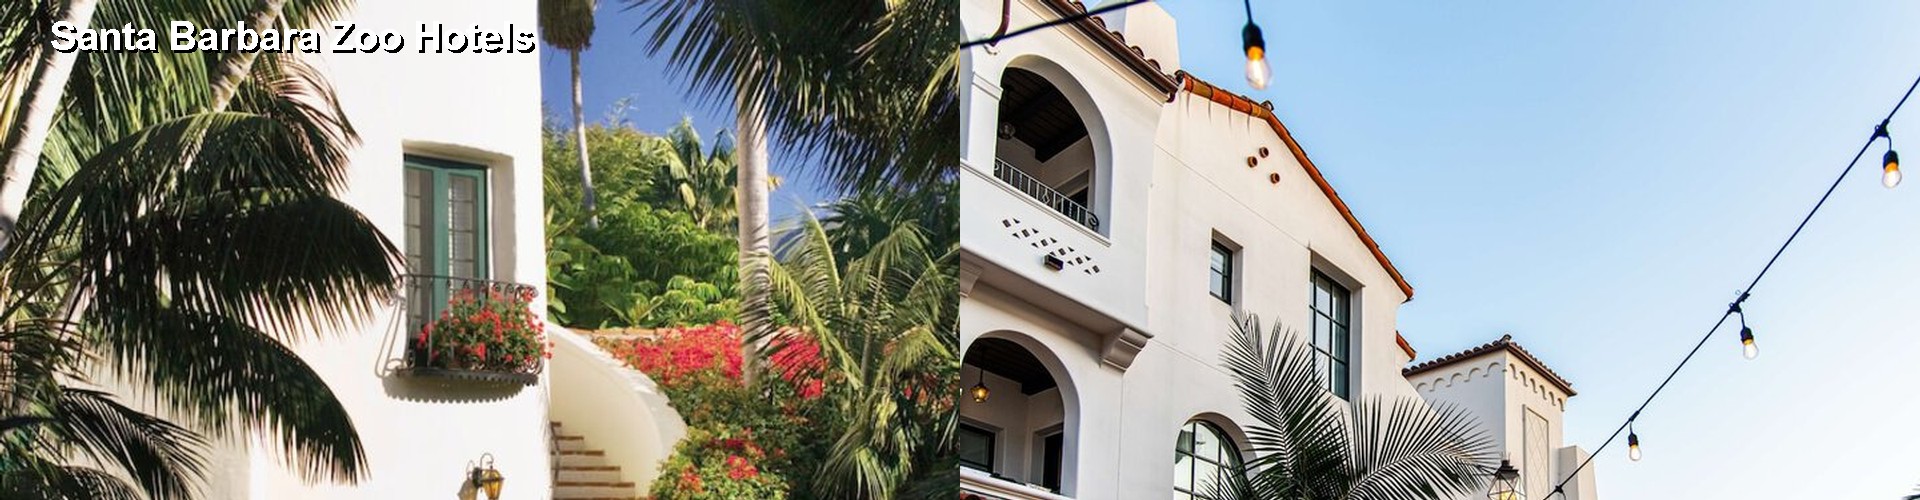 5 Best Hotels near Santa Barbara Zoo